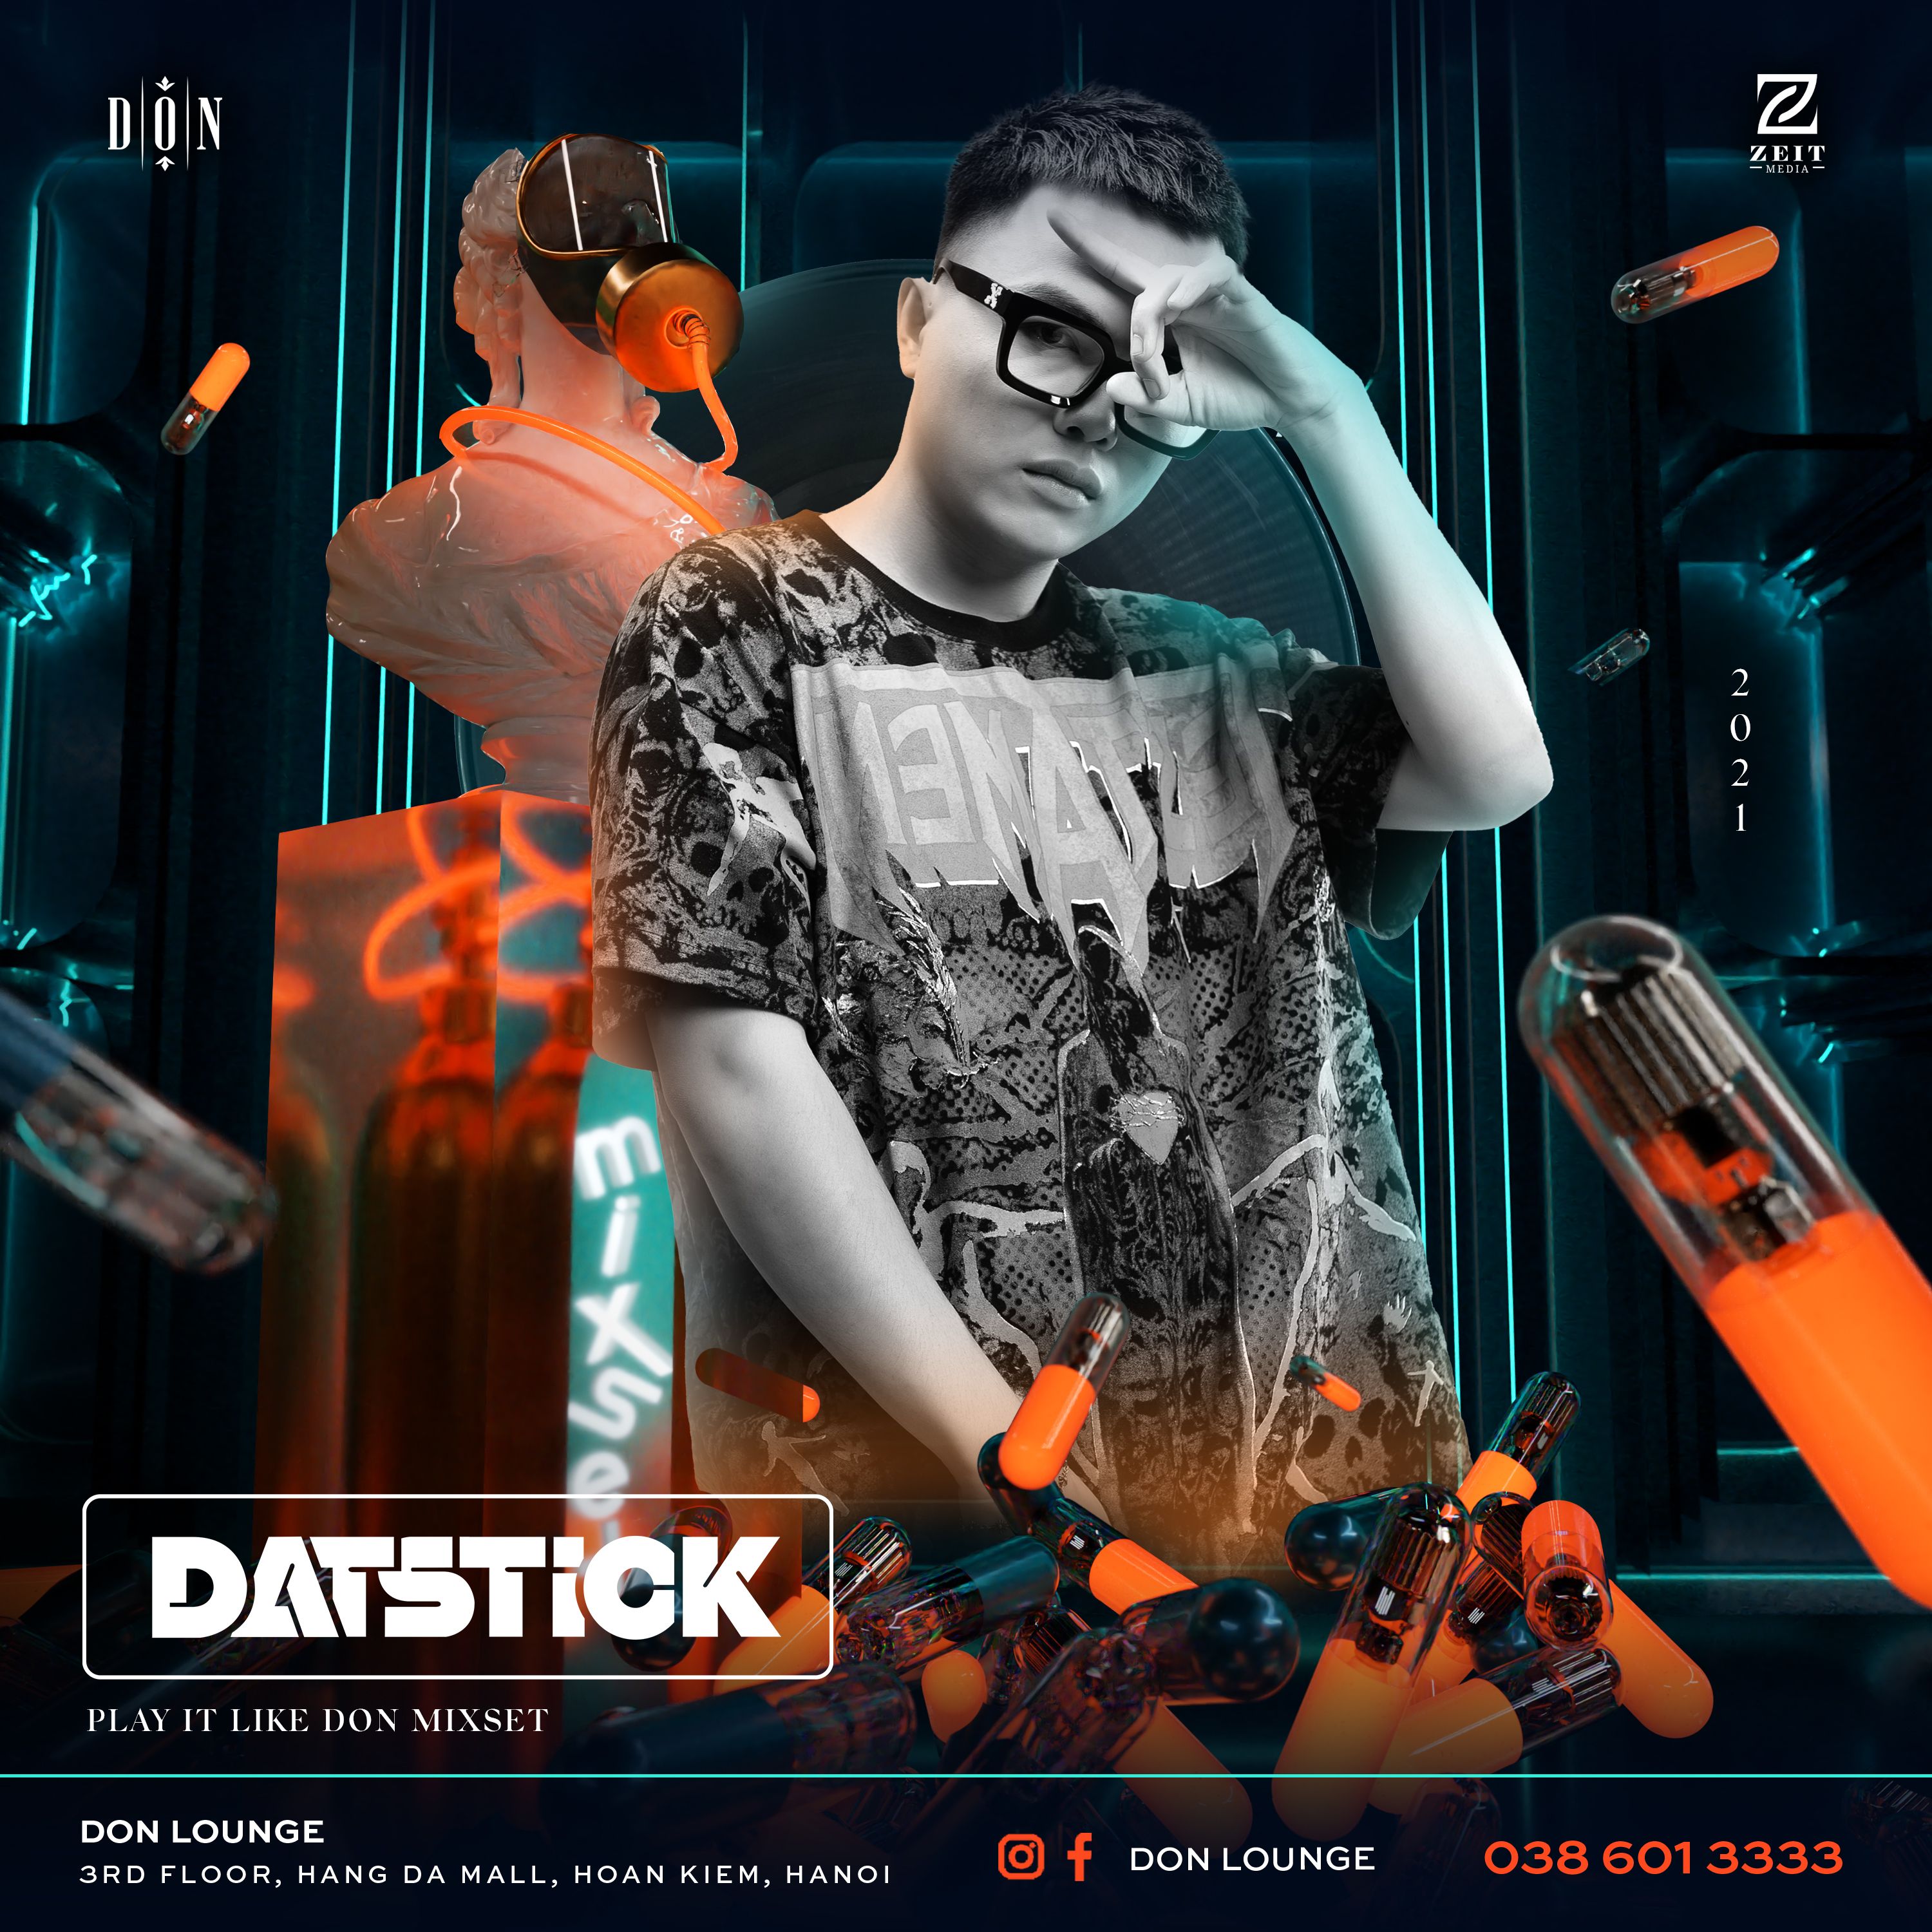 Descarca DON MIXSET || KEEP ROLLIN’ ON - DJ DATSTICK